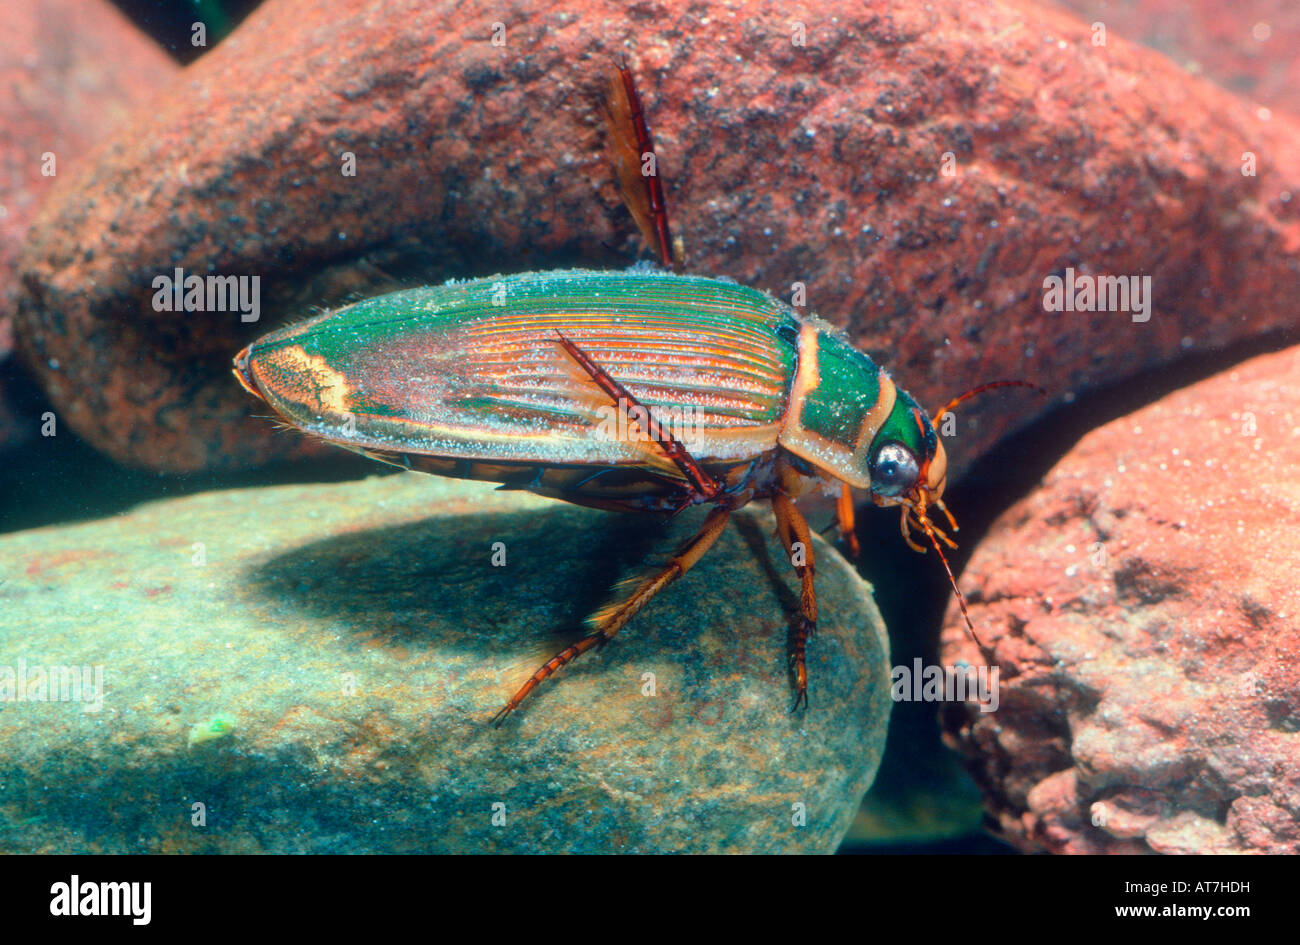 Diving Beetle, Dytiscus marginalis. Adult underwater Stock Photo